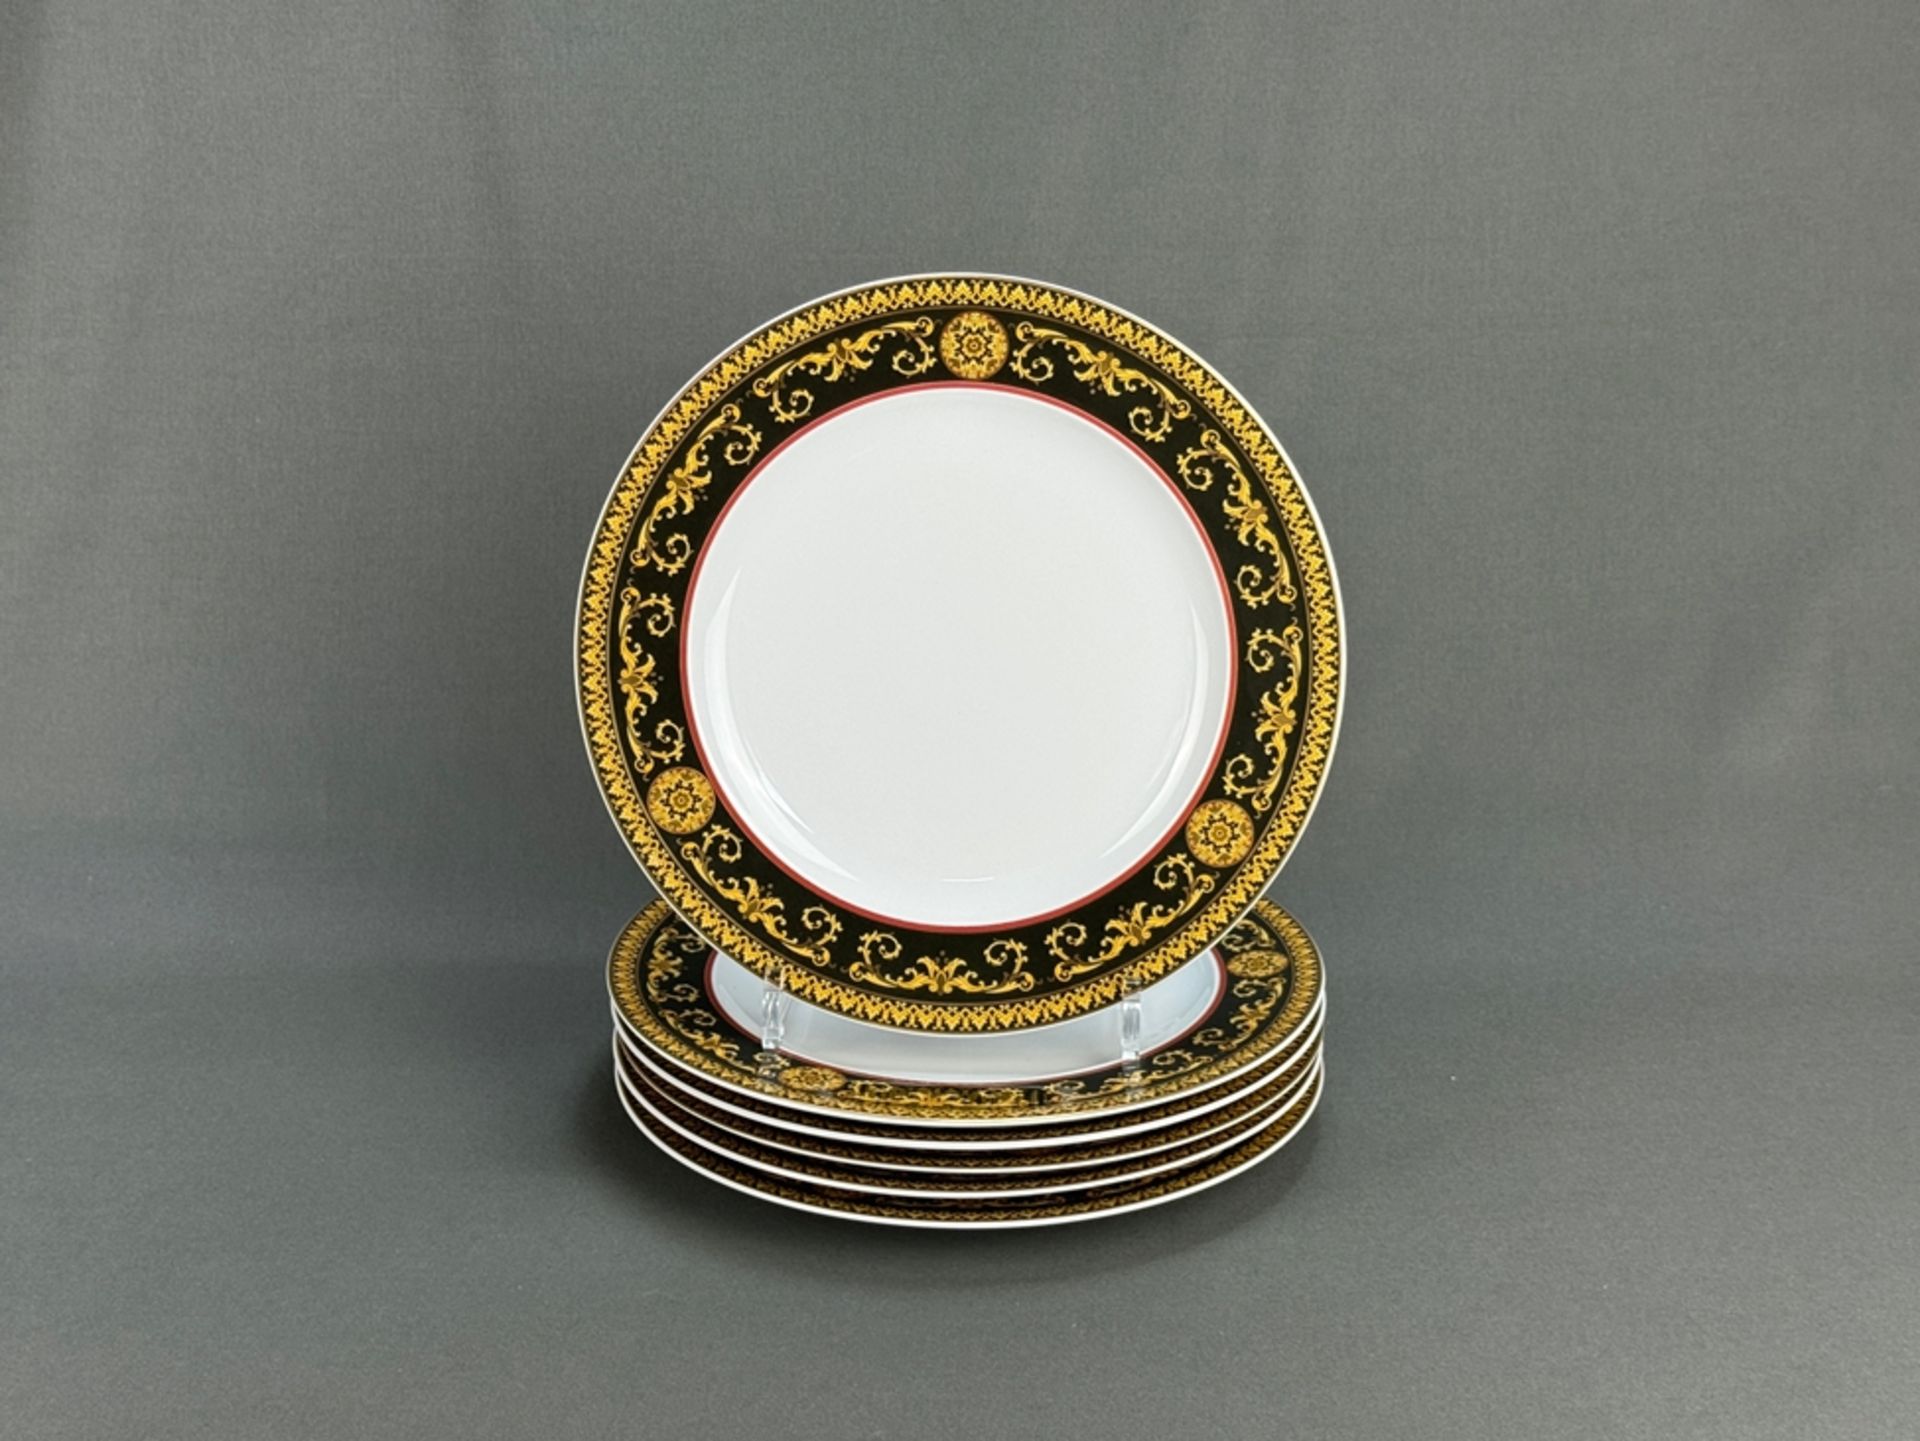 Six dinner plates, Rosenthal, Versace design, Medusa decor, black/gold base mark, border with baroq